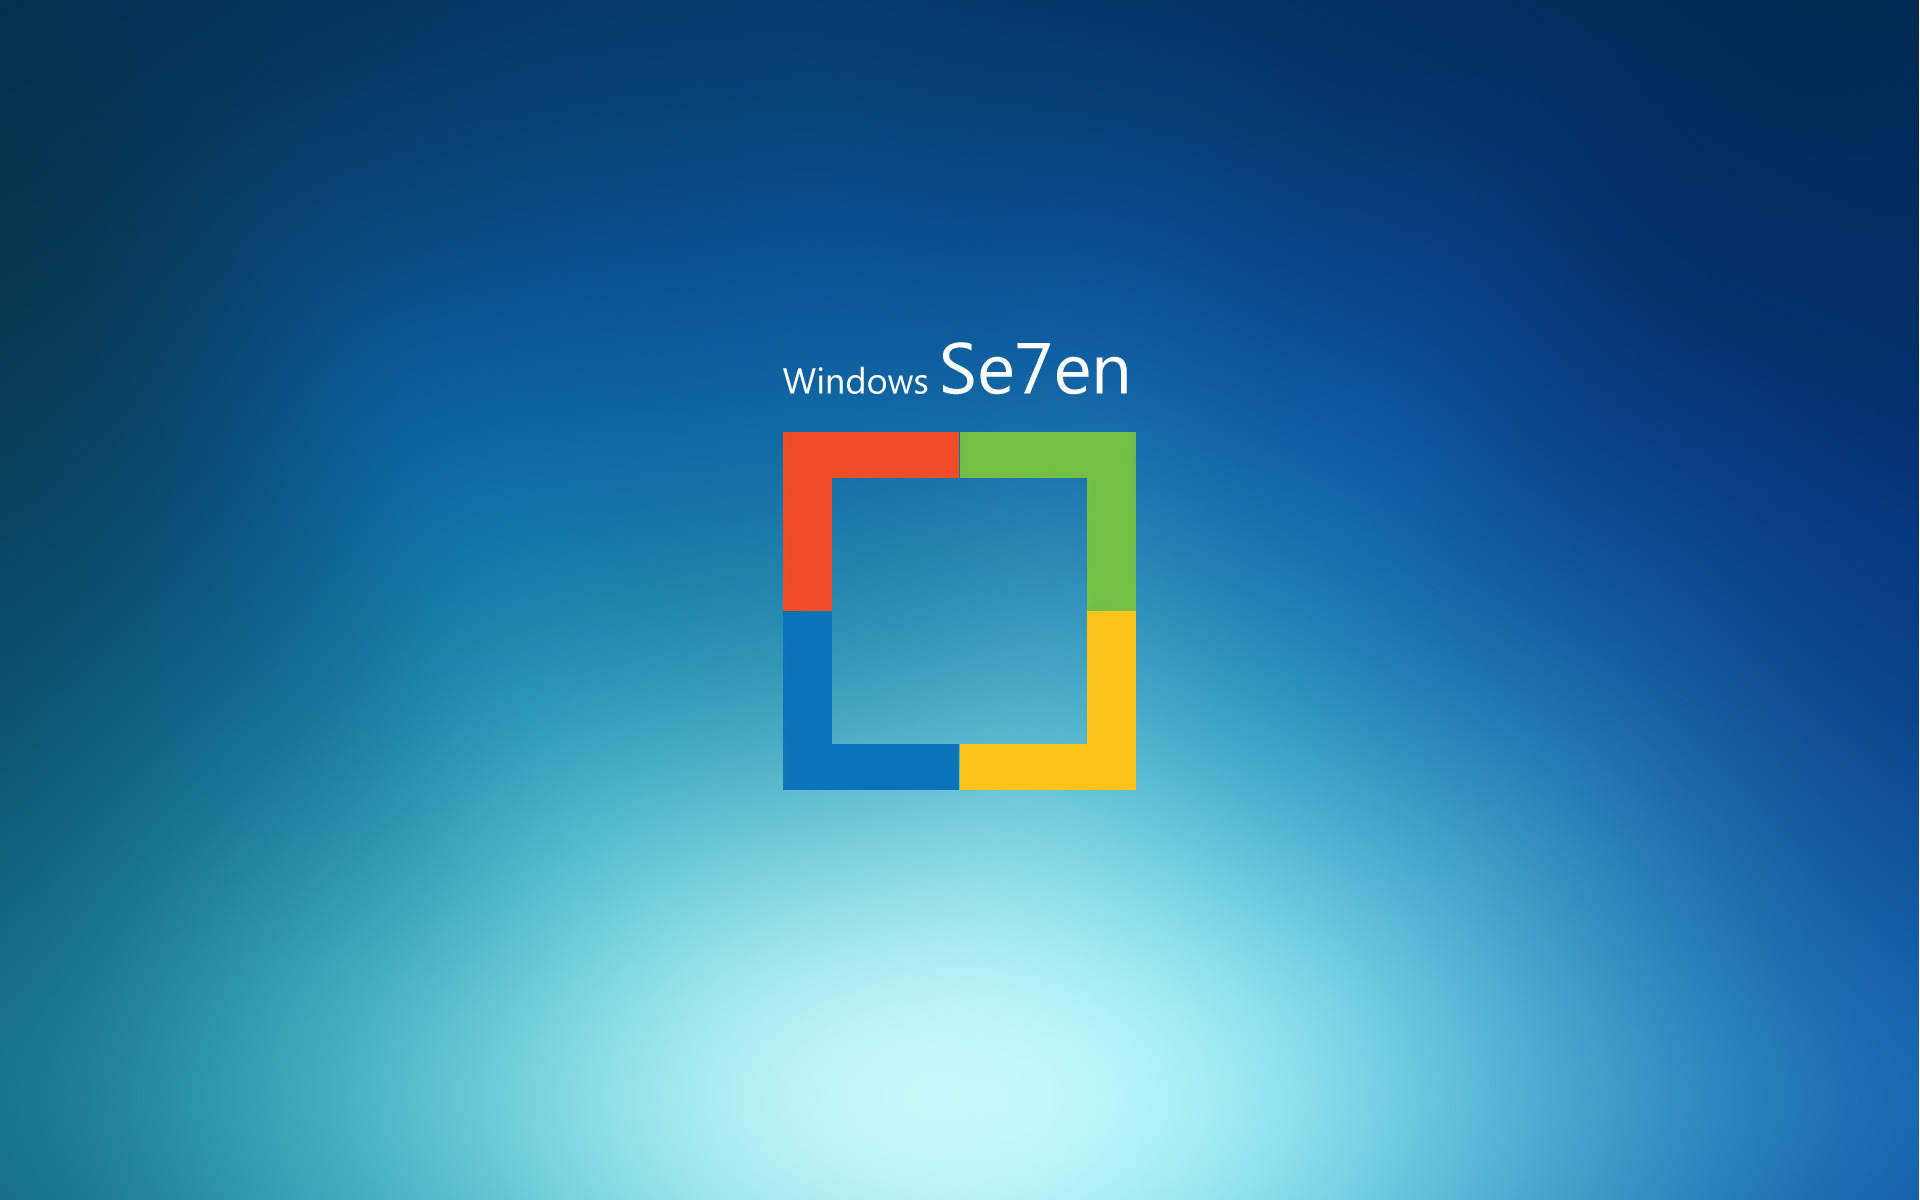 Technology Windows 7 1920x1200